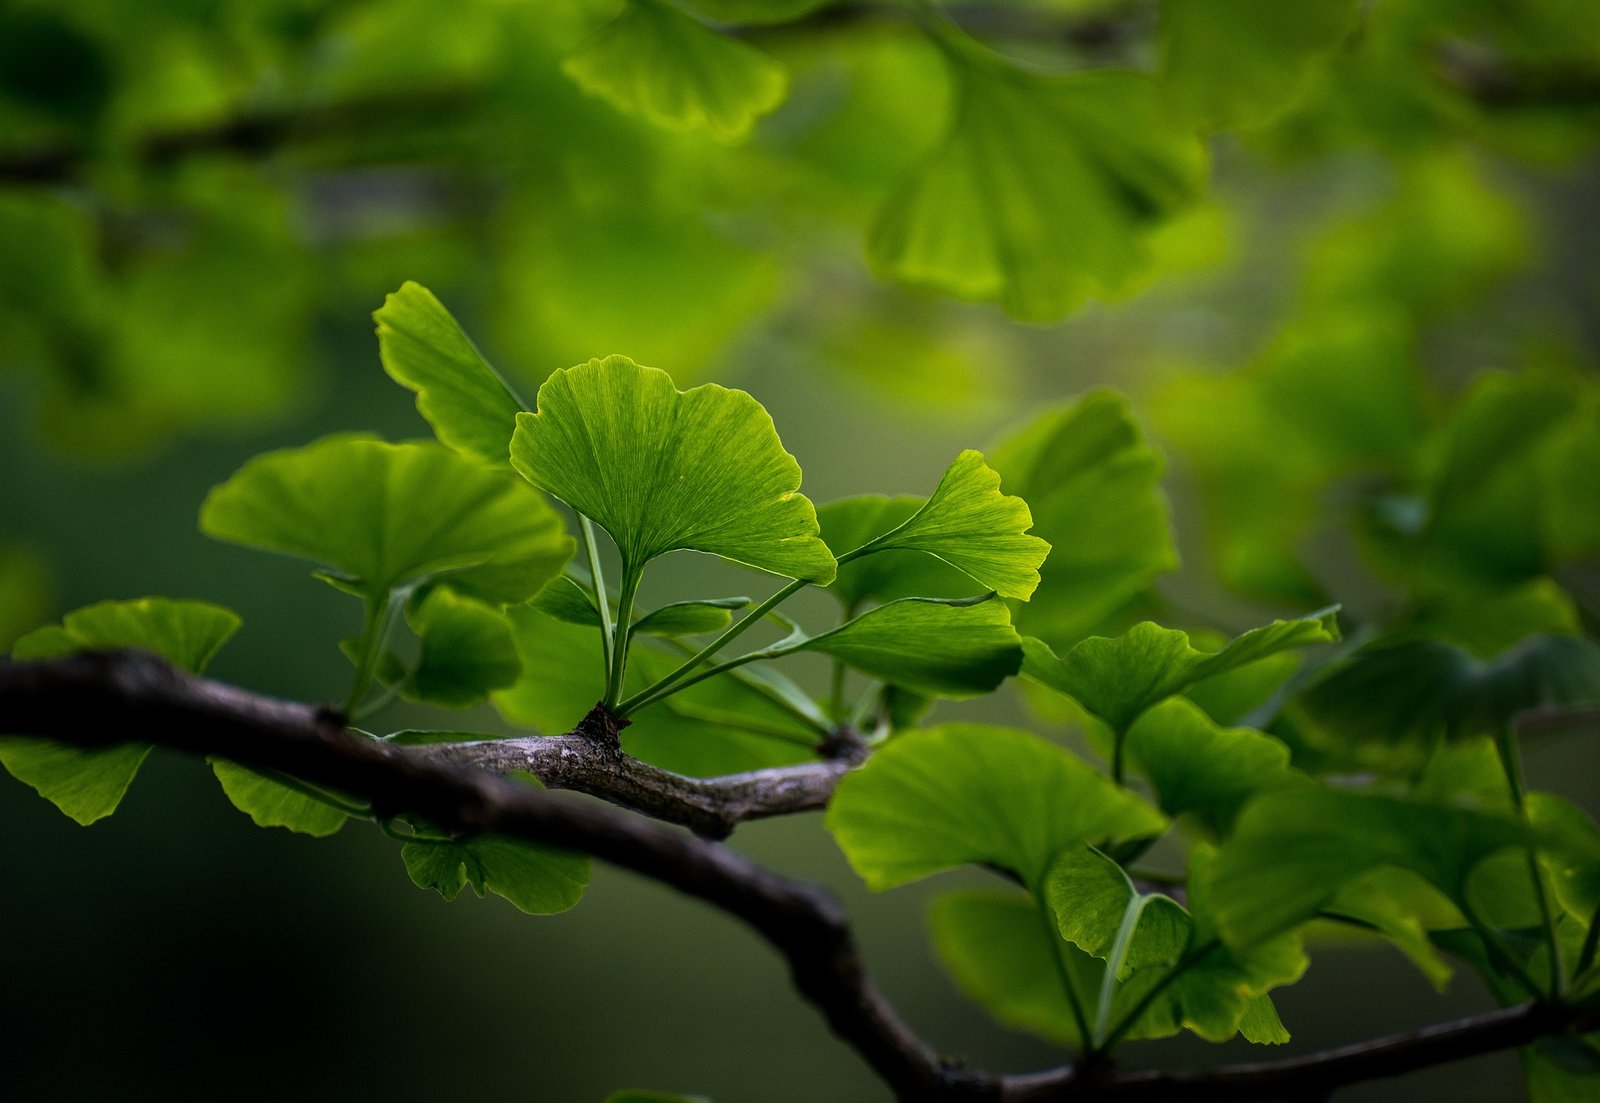 Ginkgo leaf meaning